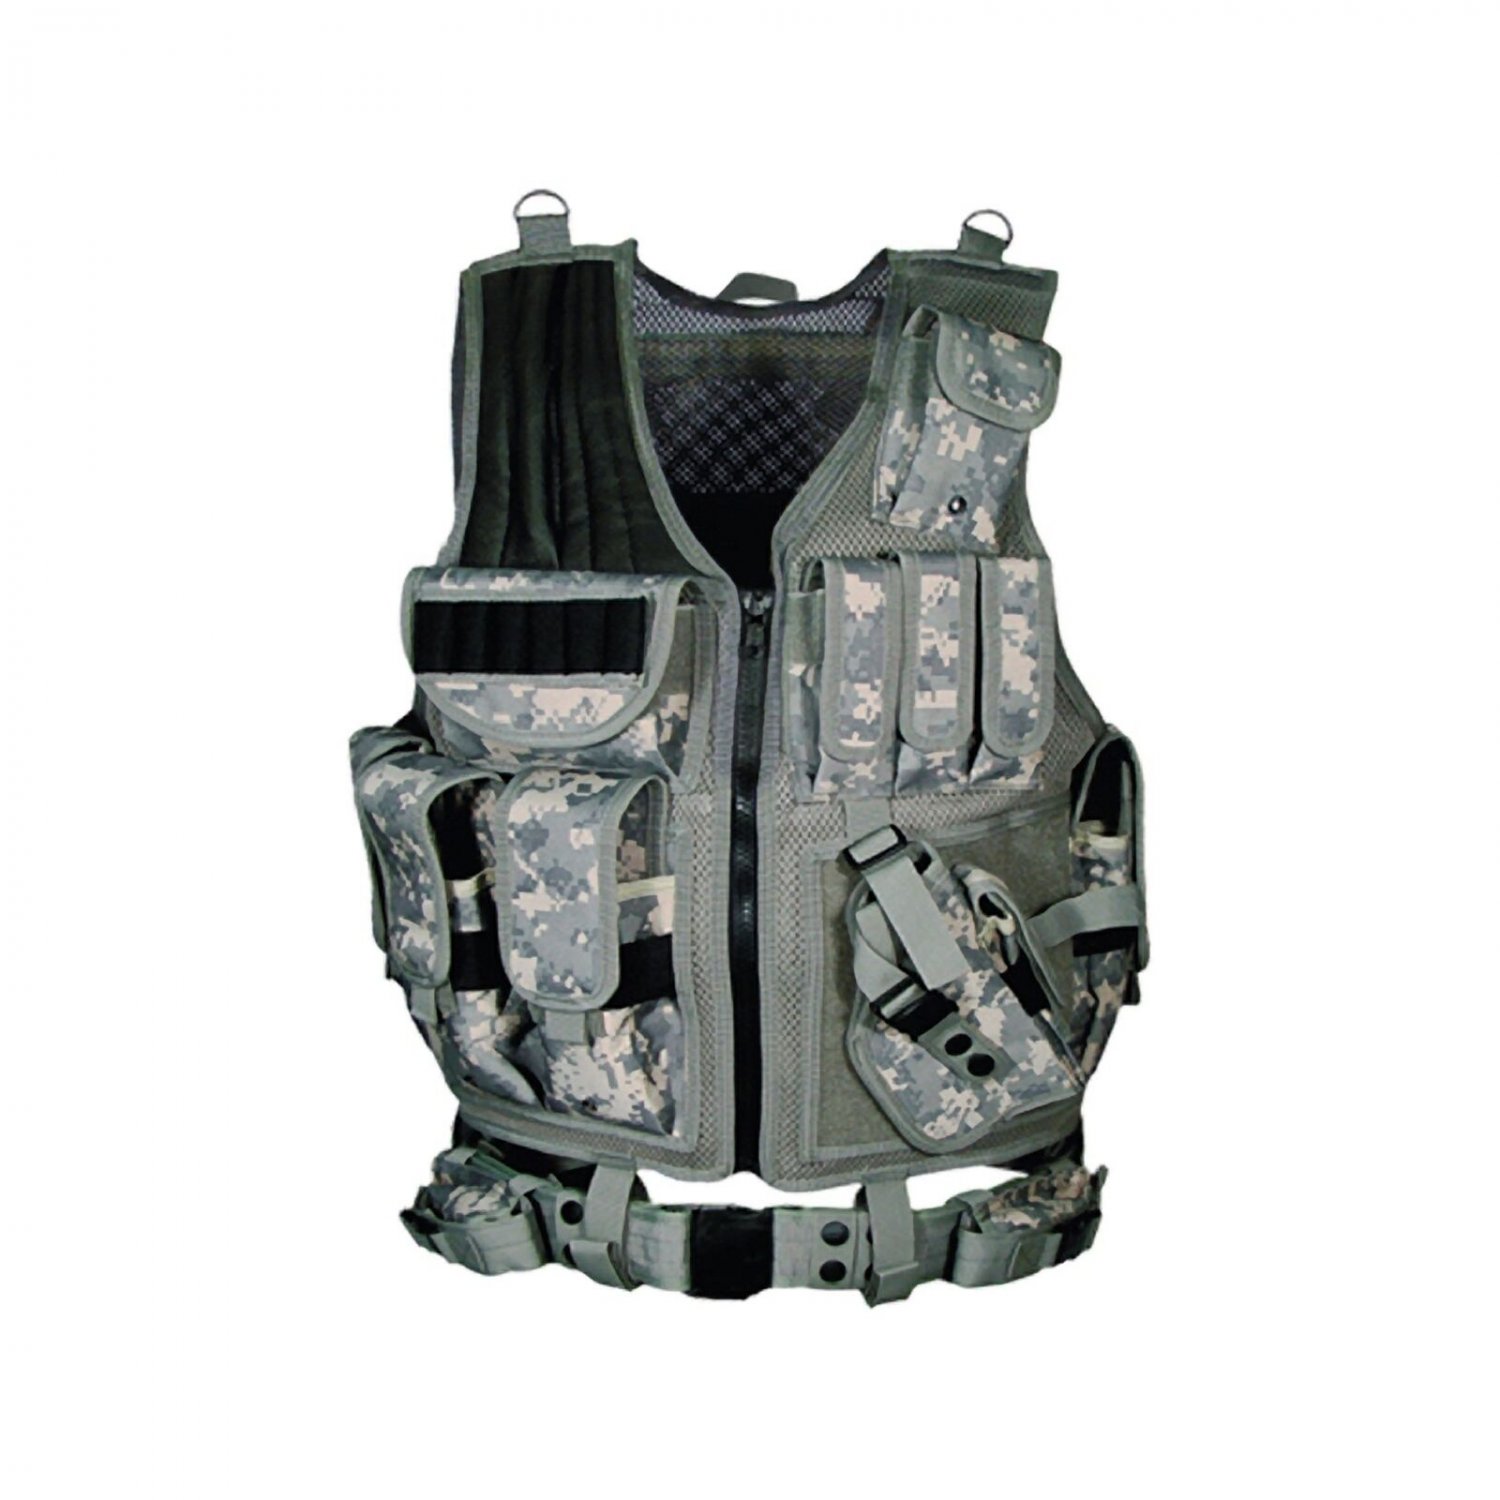 Utg 547 Law Enforcement Tactical Vest Army Digital Swat